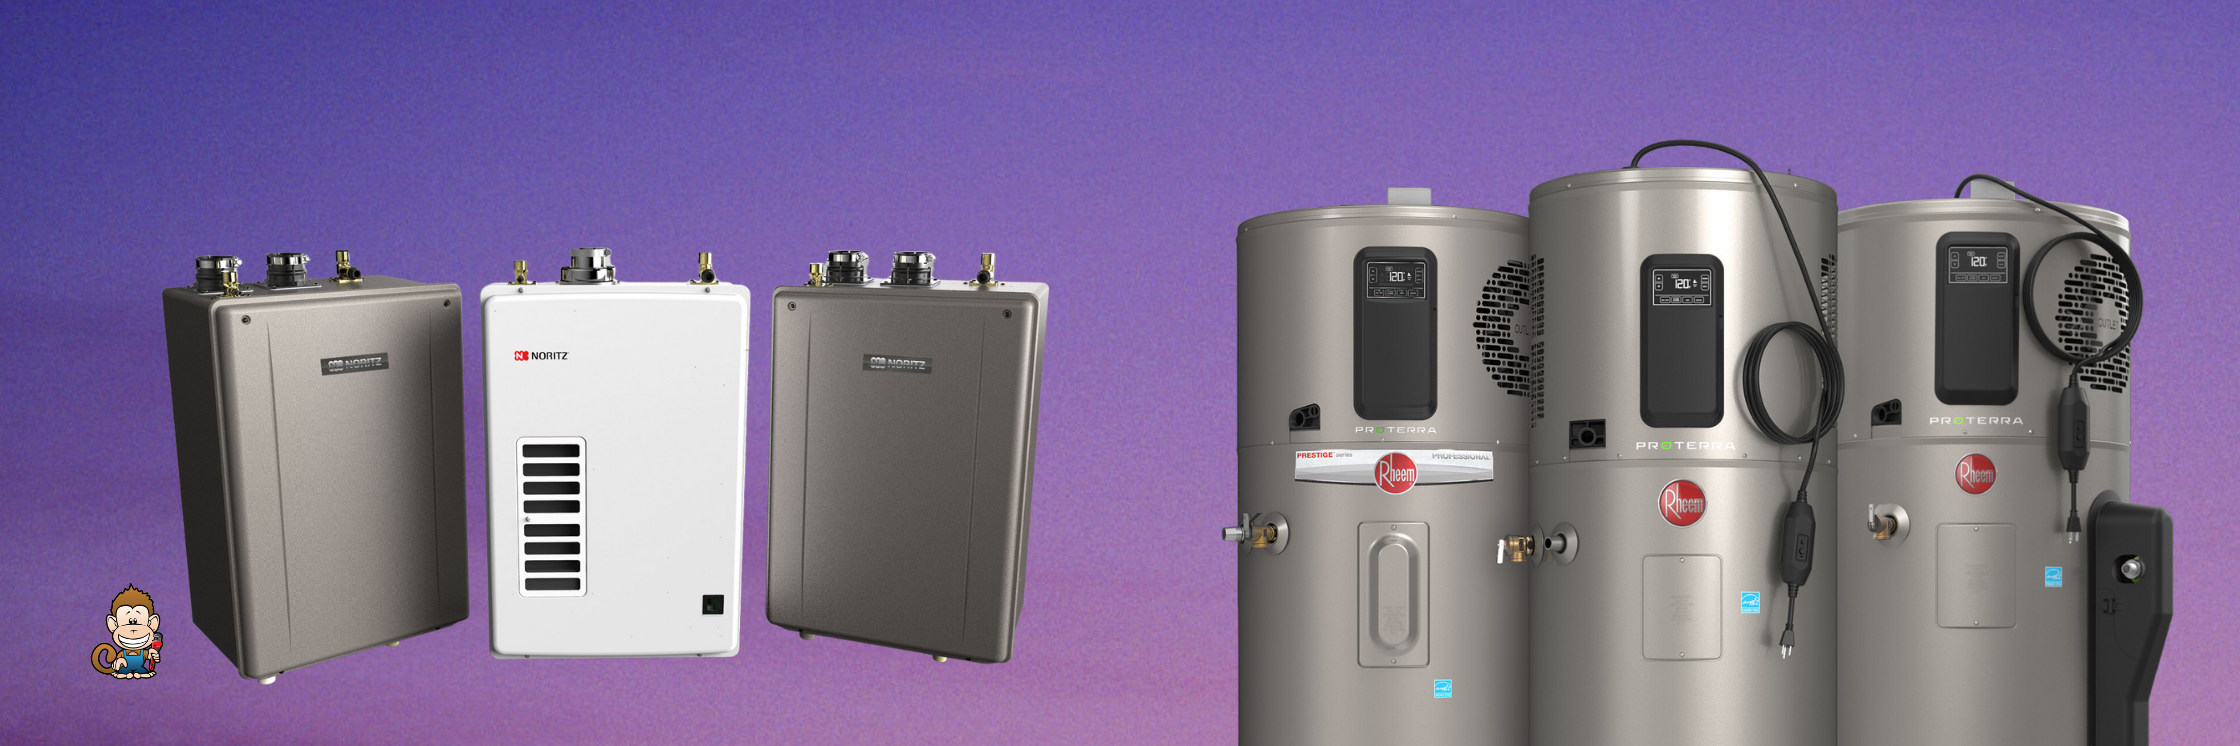 Tankless Water Heaters vs. Heat Pump Water Heaters